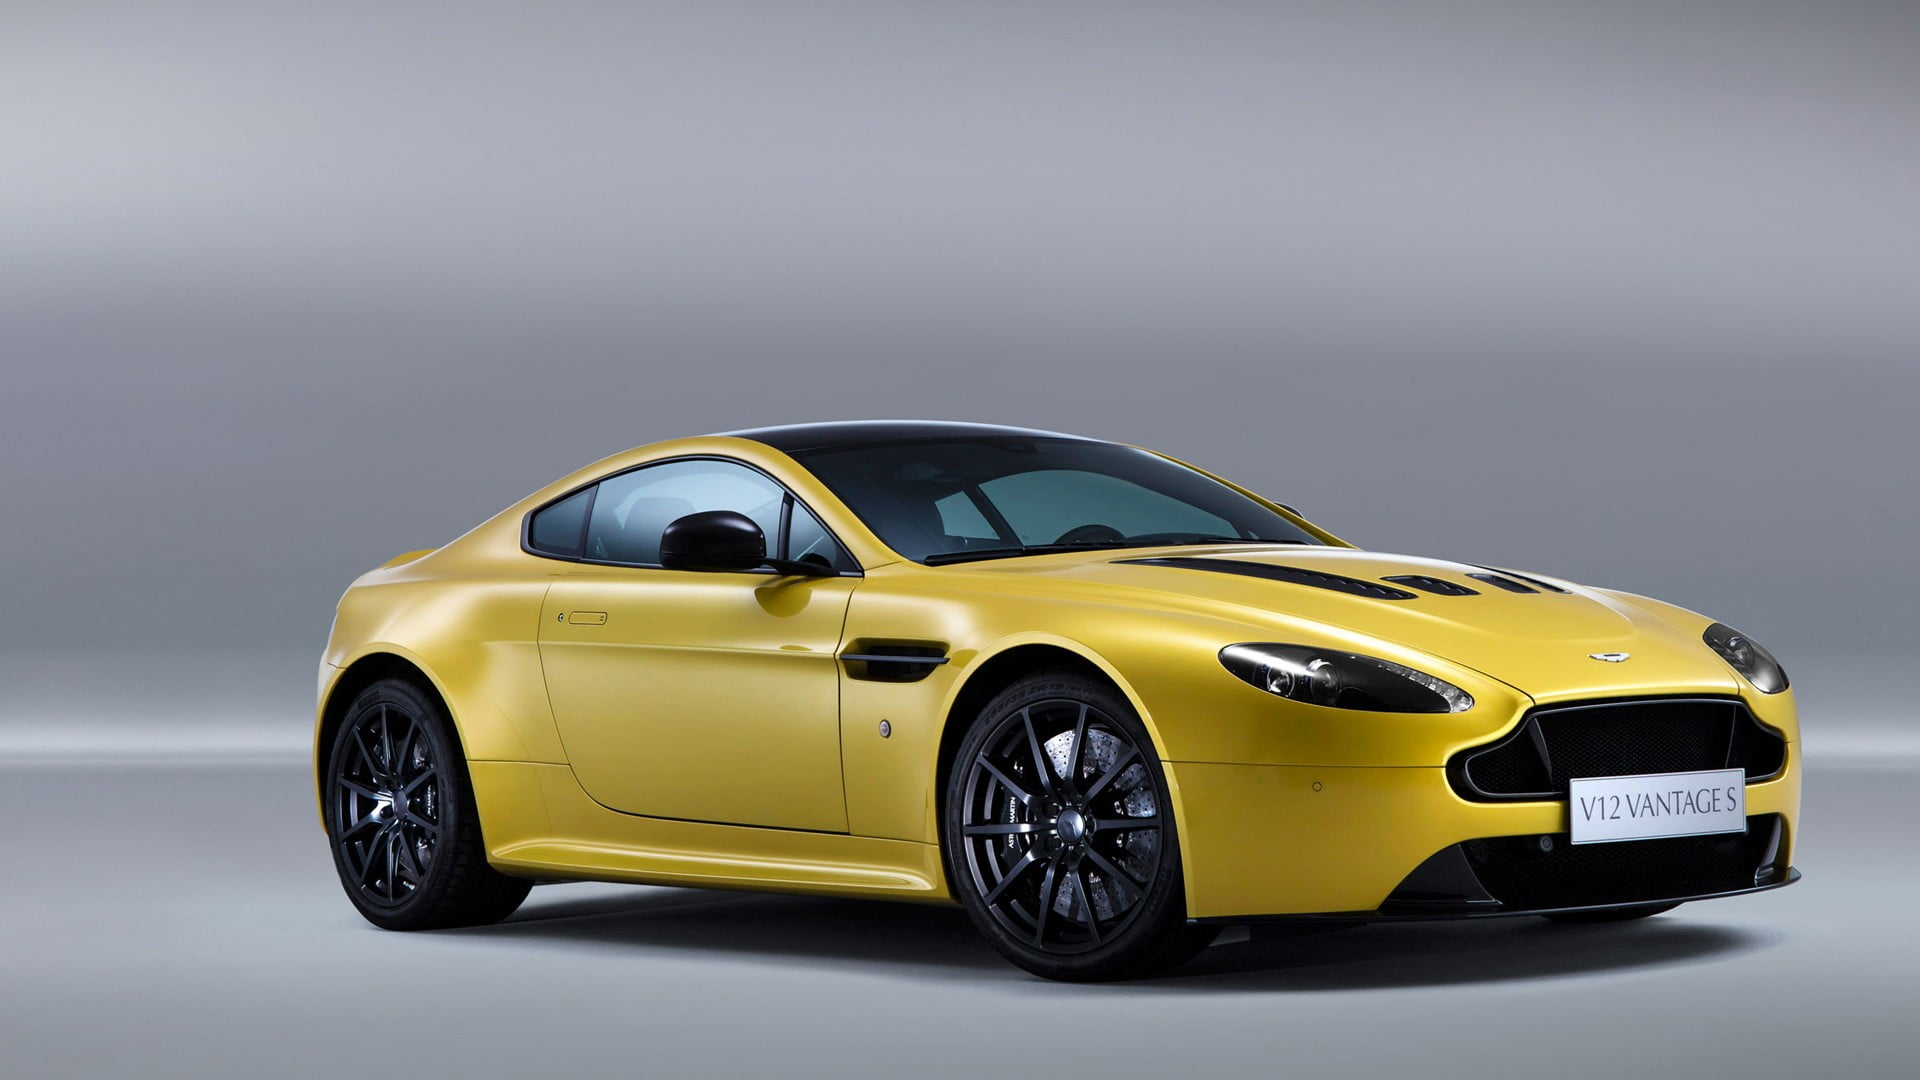 Aston Martin V12 Vantage, car, vehicle, yellow cars, gray background